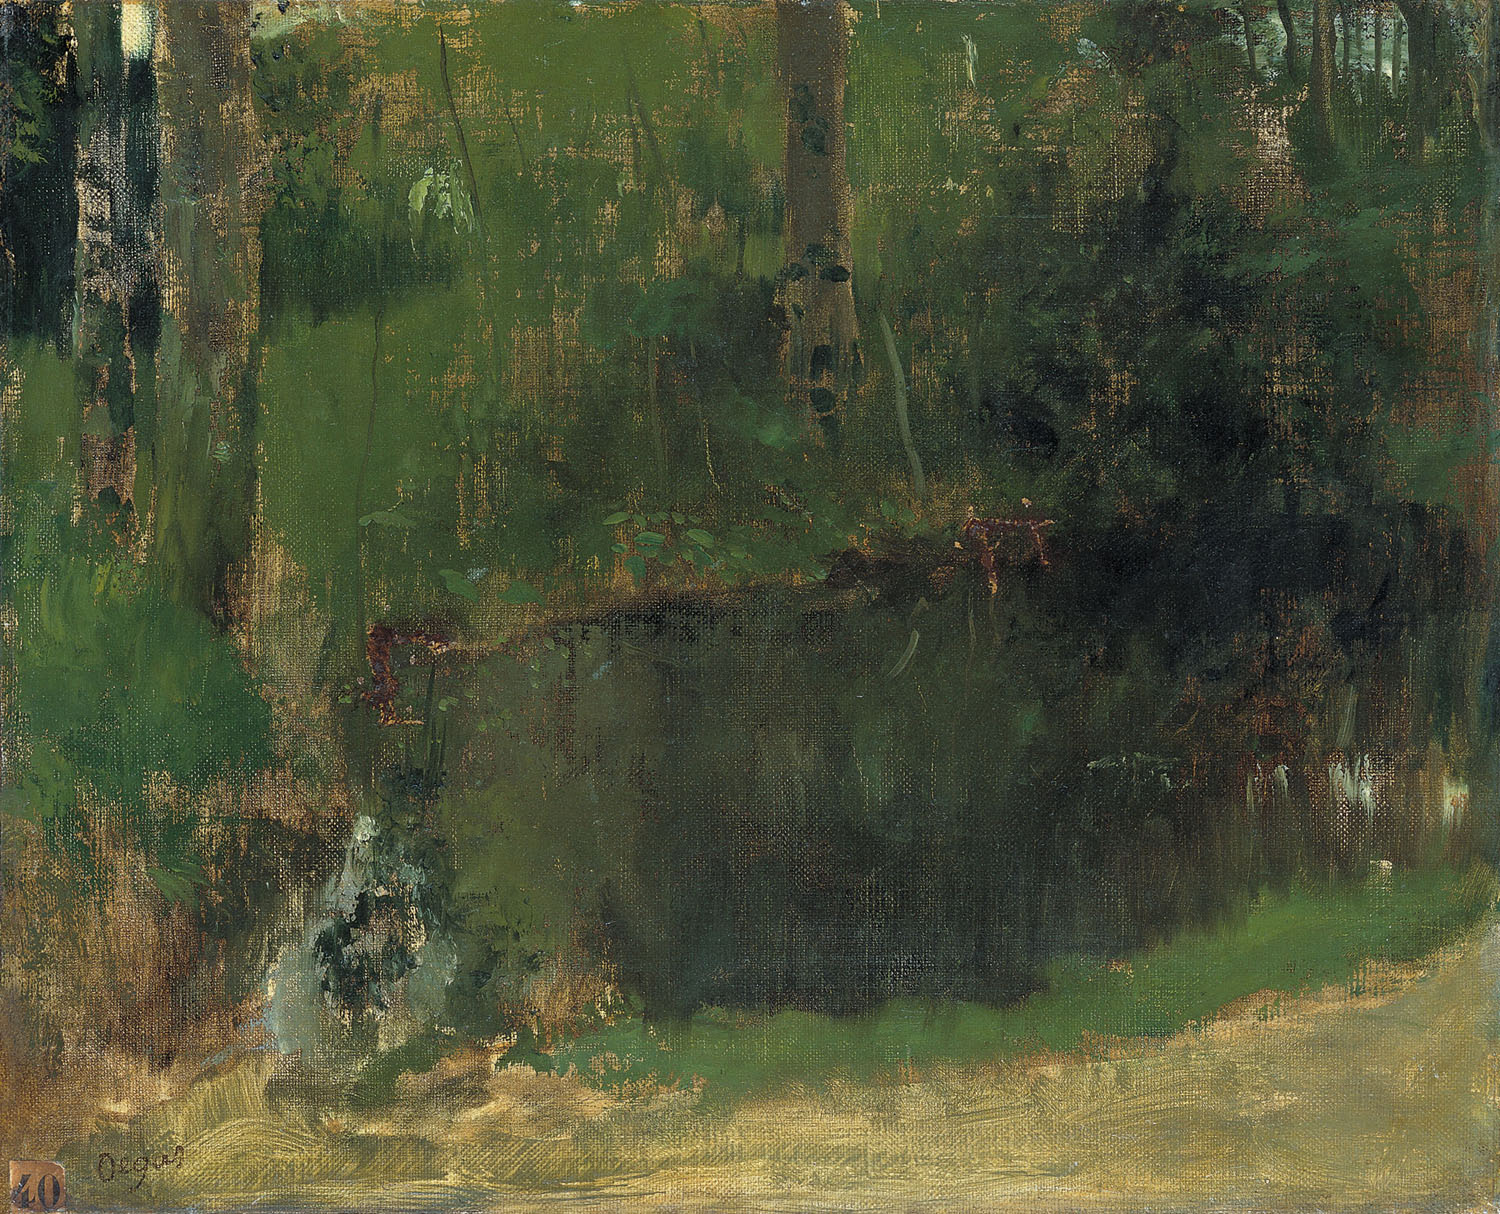 Эдгар Дега. "Пруд в лесу". Около 1867-1868.